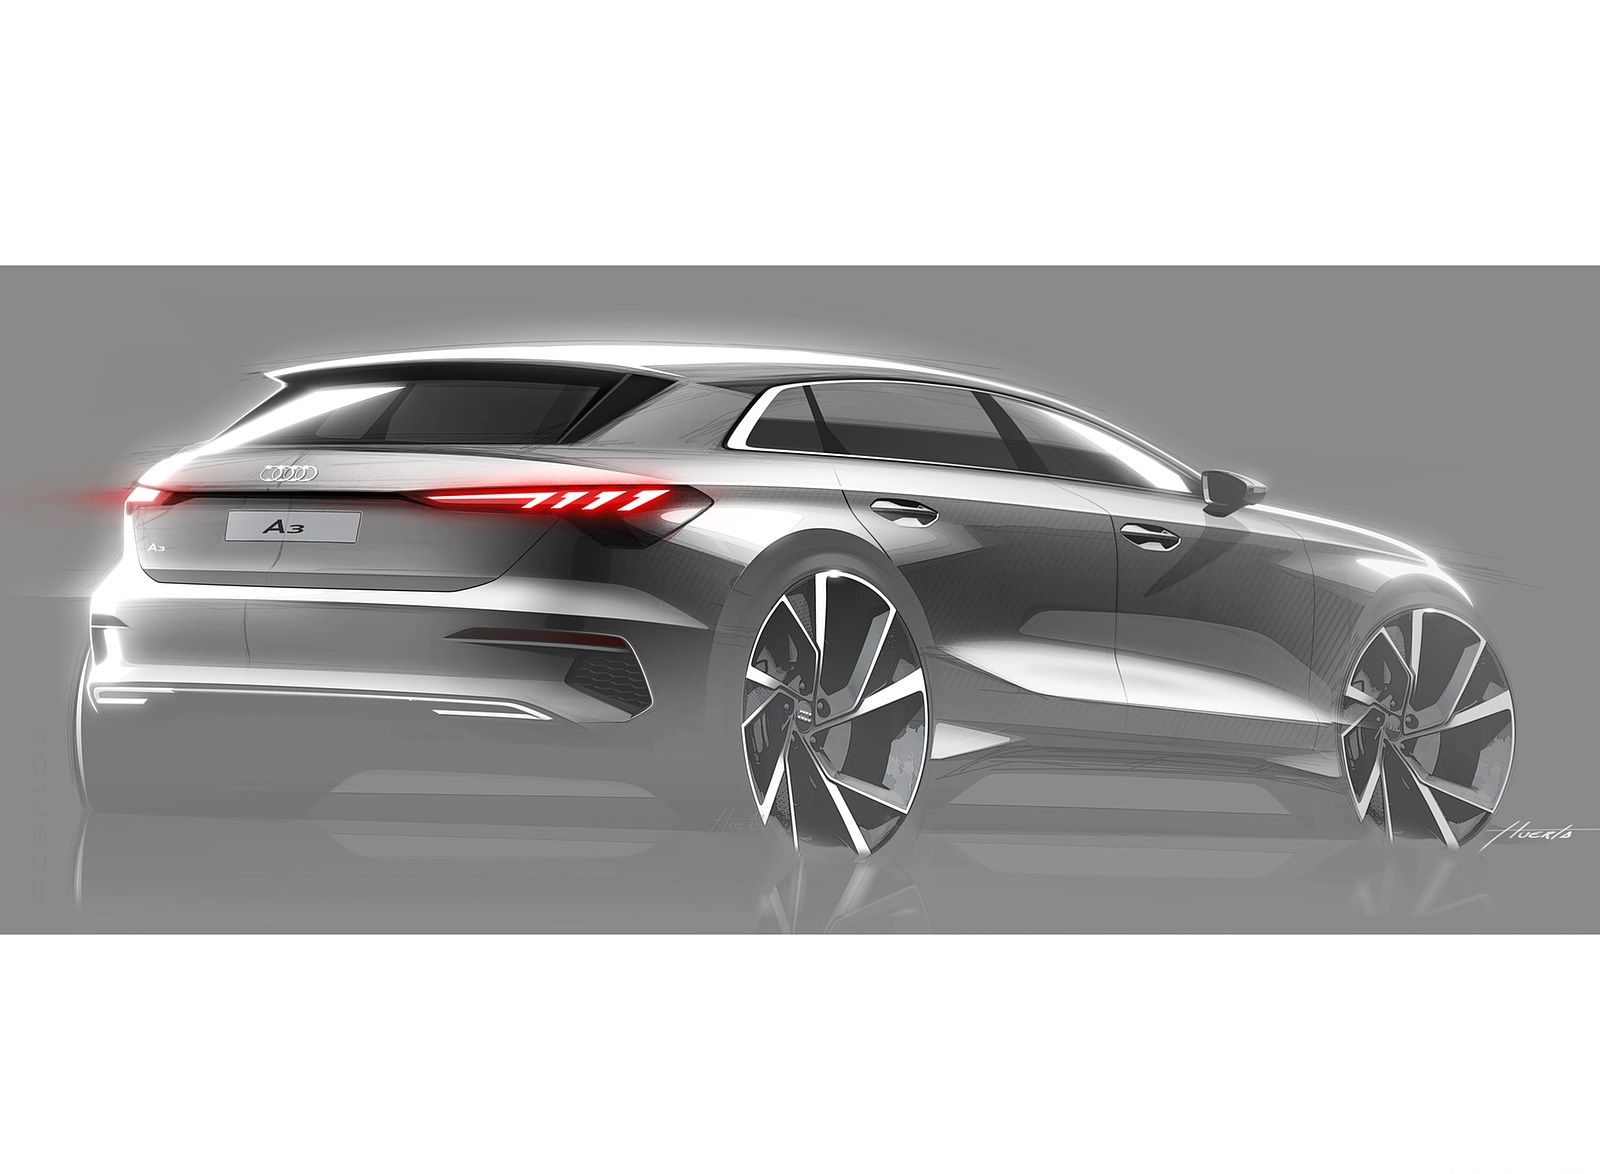 2021 Audi A3 Sportback Design Sketch Wallpapers #112 of 121